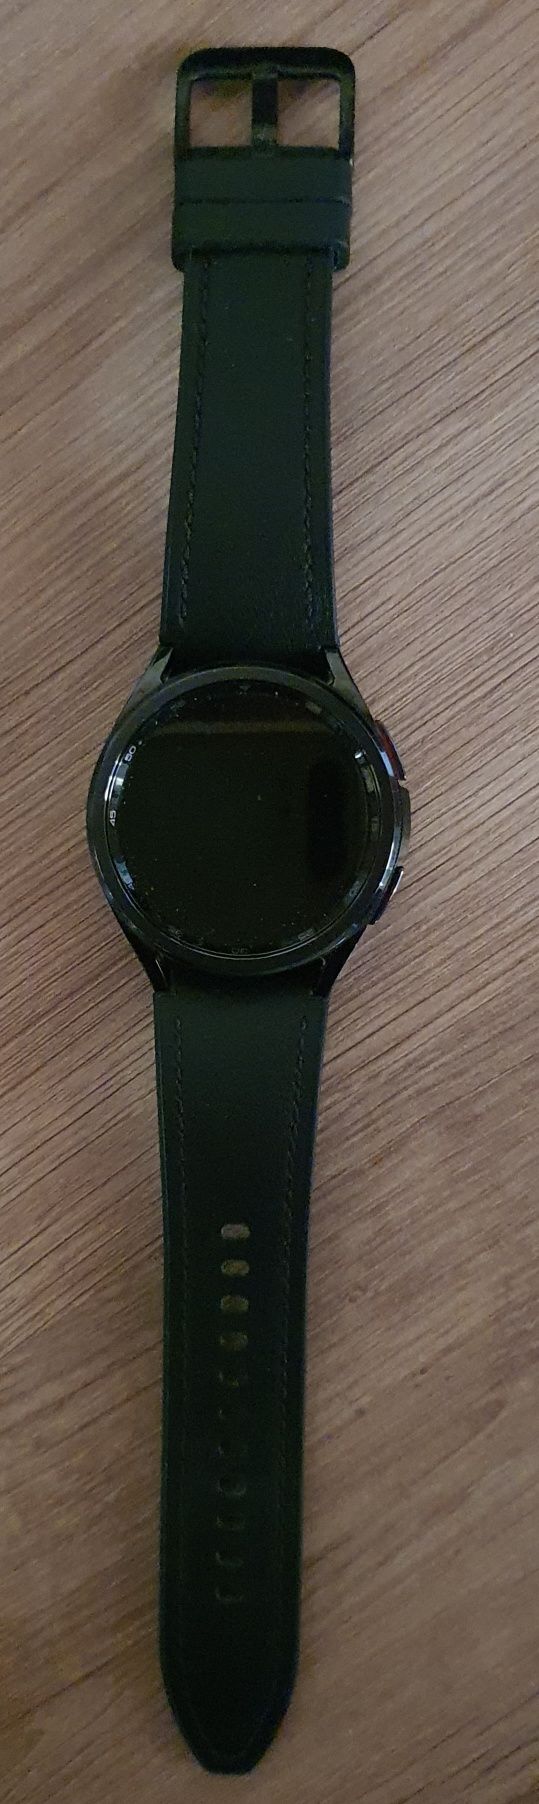 Galaxy watch 6 classic lte 43mm